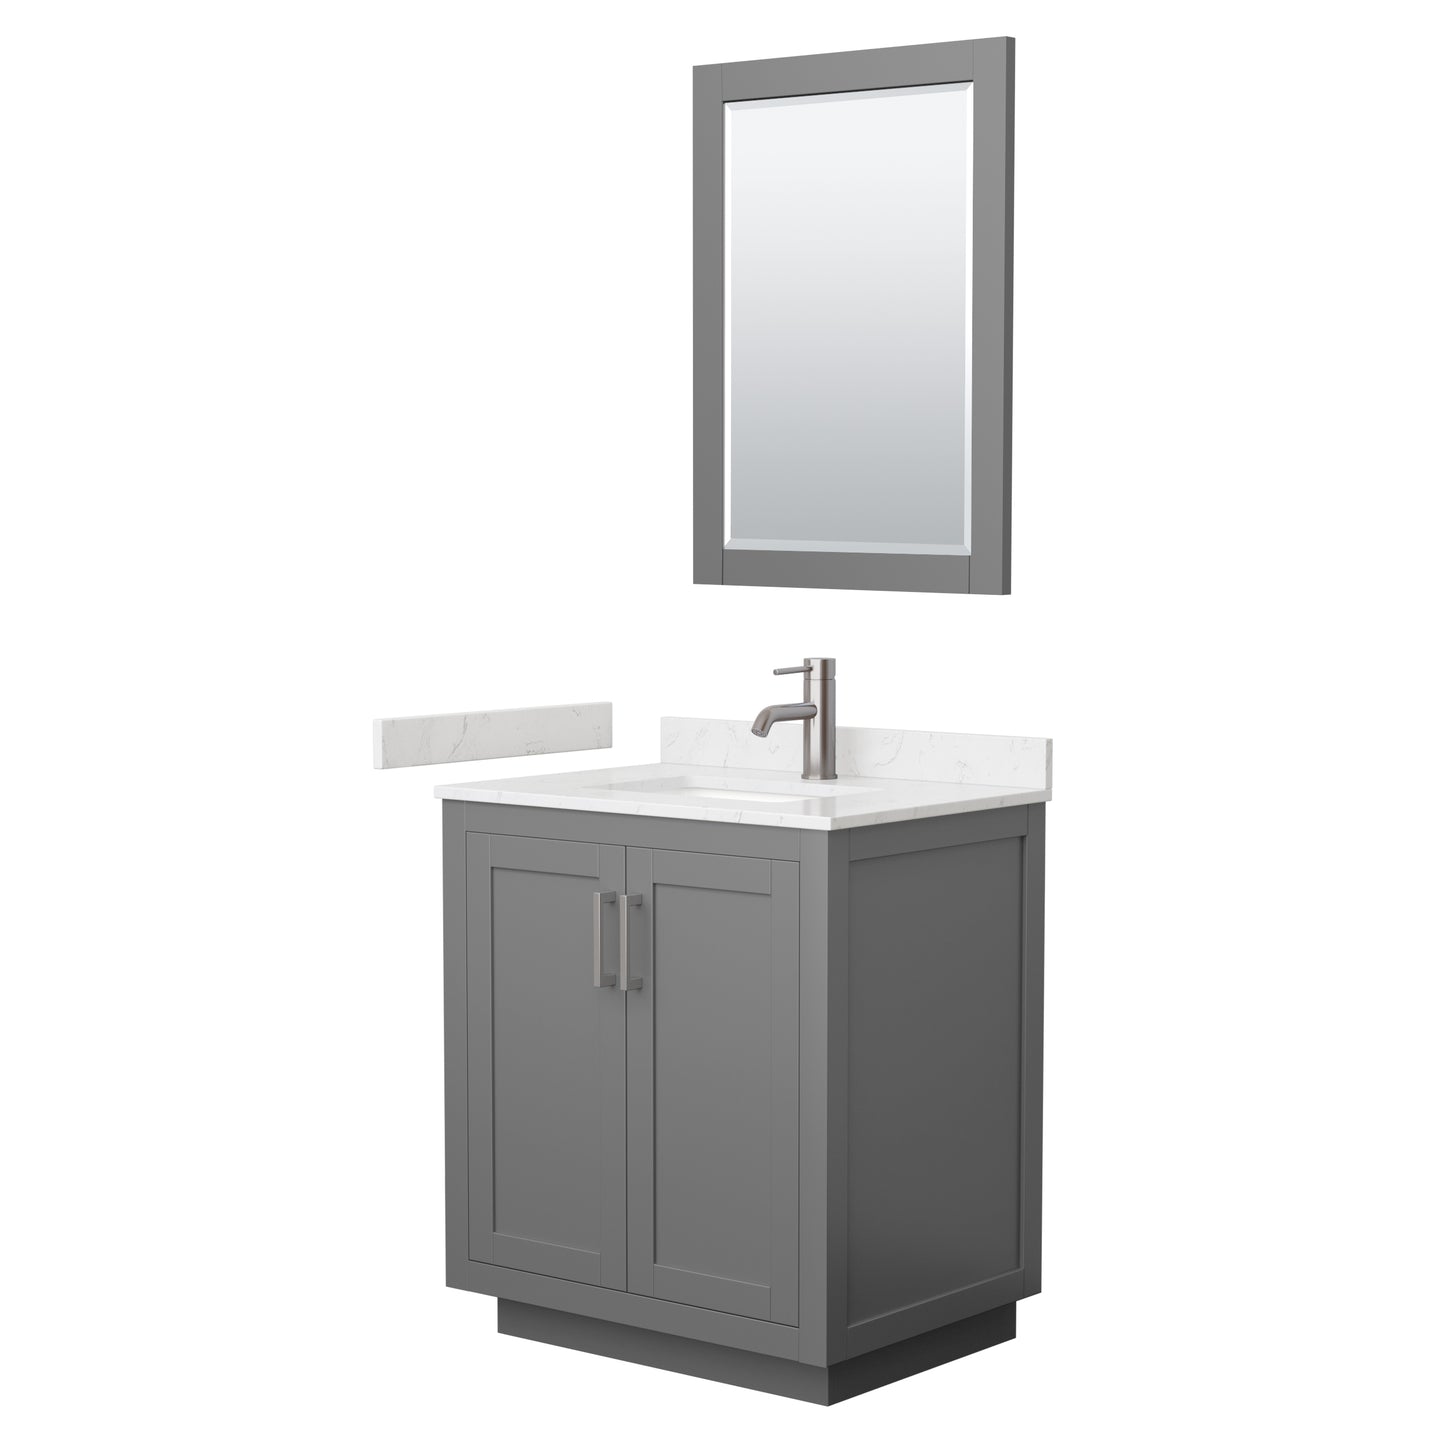 Wyndham Miranda 30 Inch Single Bathroom Vanity in Light-Vein Carrara Cultured Marble Countertop with Undermount Square Sink and Trim - Luxe Bathroom Vanities